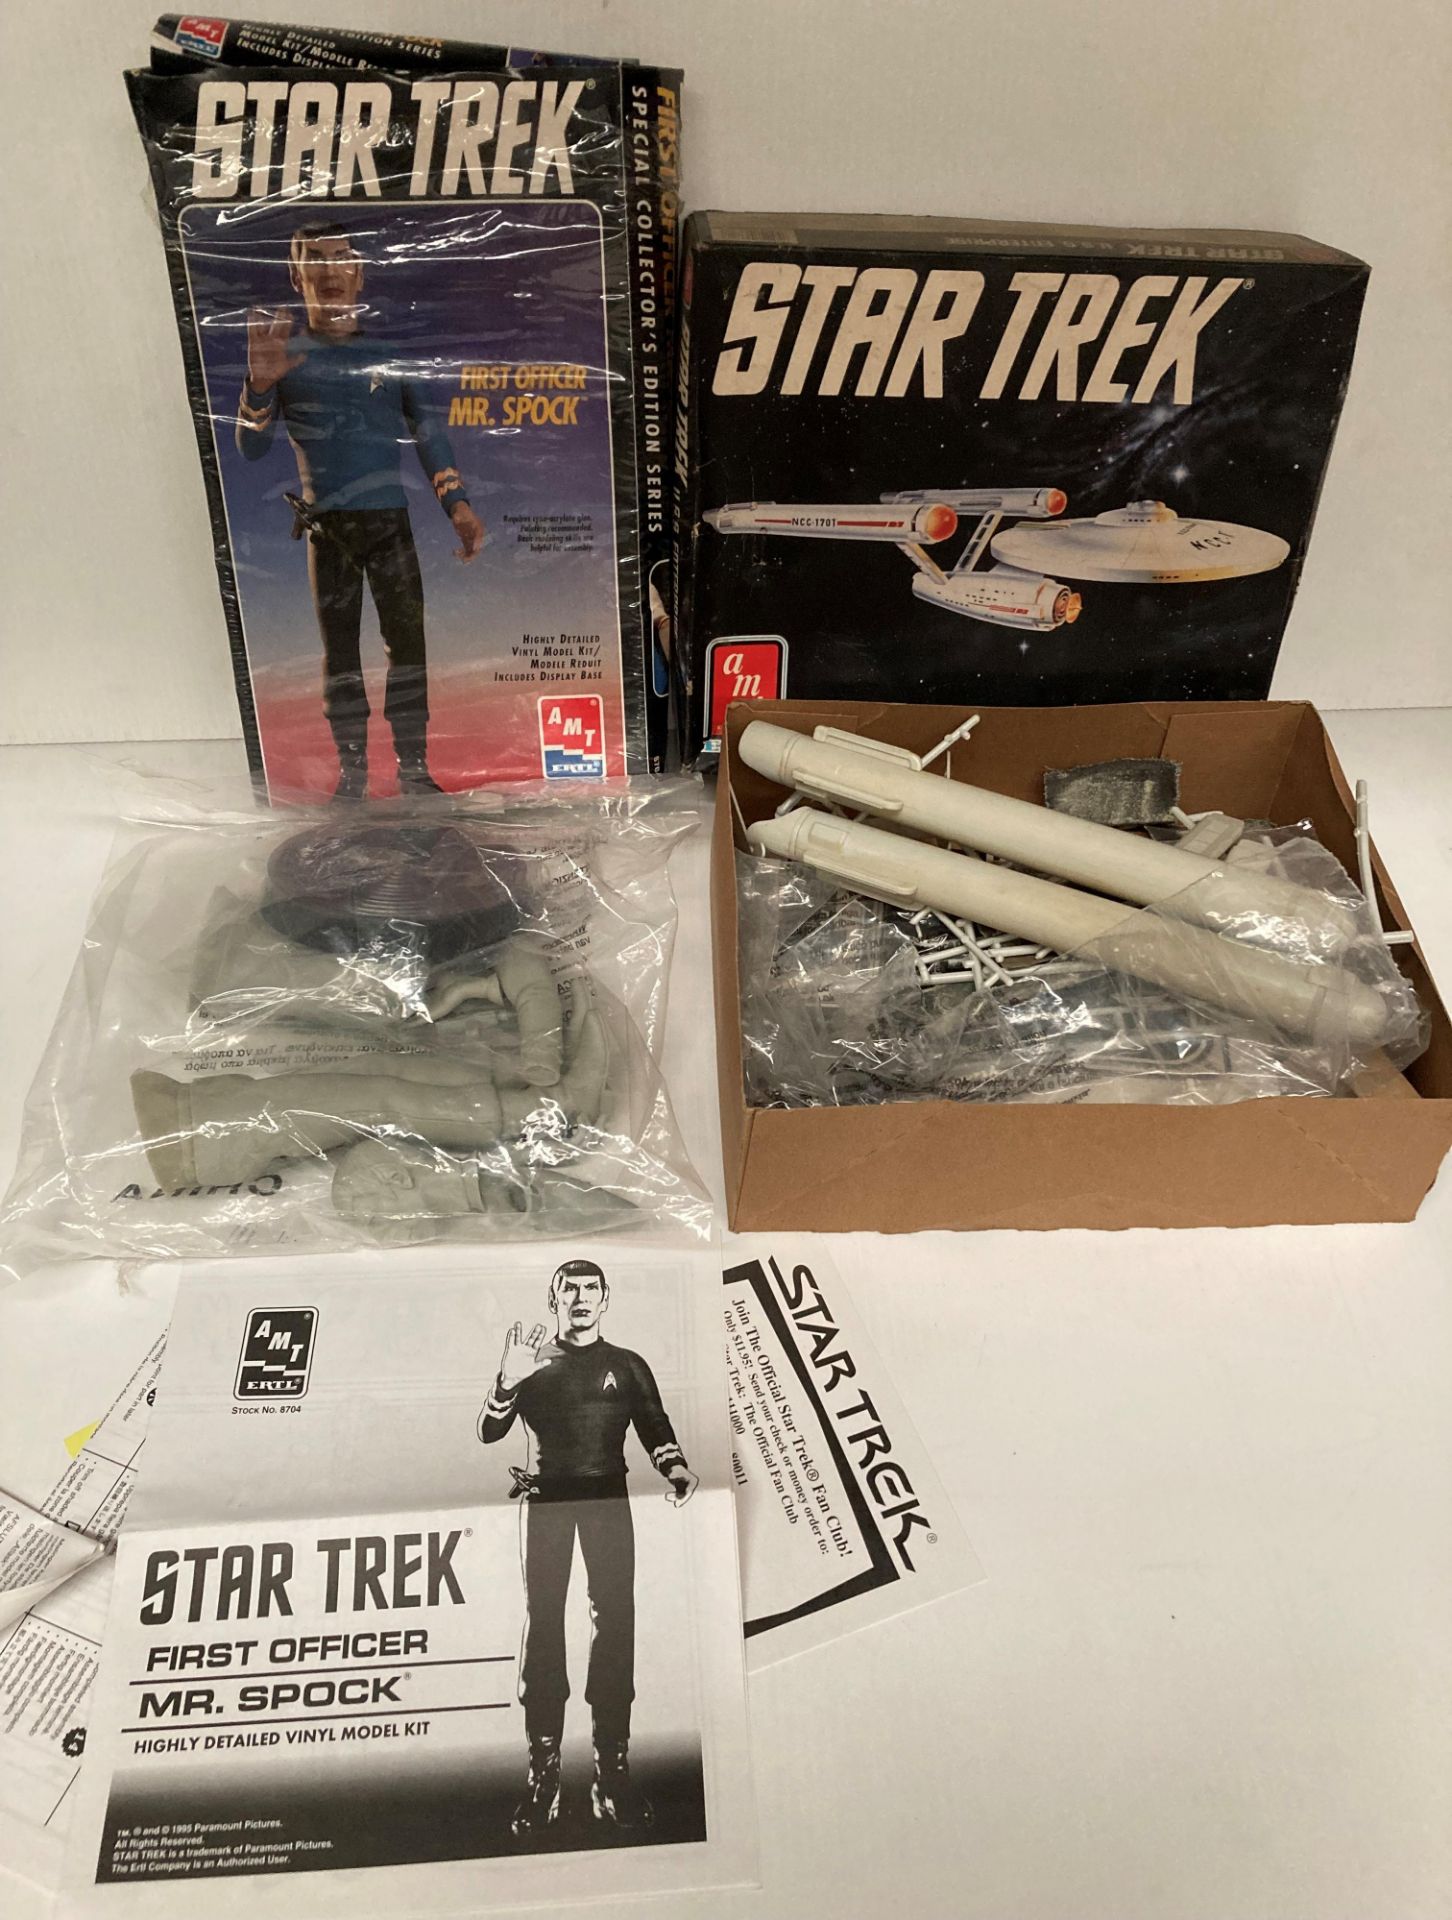 STAR TREK First Officer "Mr Spock" highly detailed vinyl model kit - Special Collectors Edition - Image 2 of 3